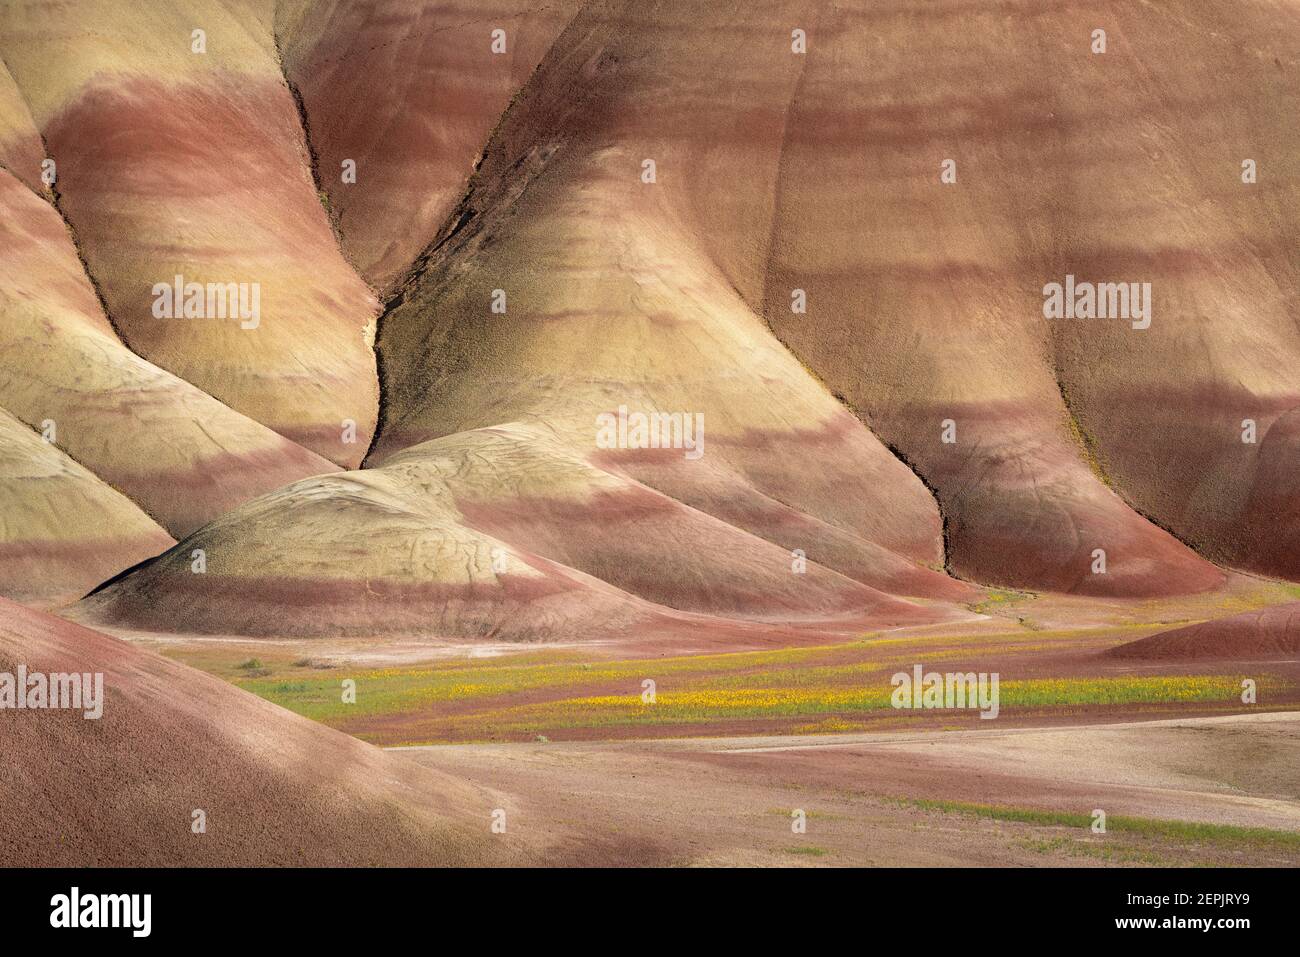 Le colline dipinte di John Day Fossil Beds National Monument nell'Oregon orientale. Foto Stock